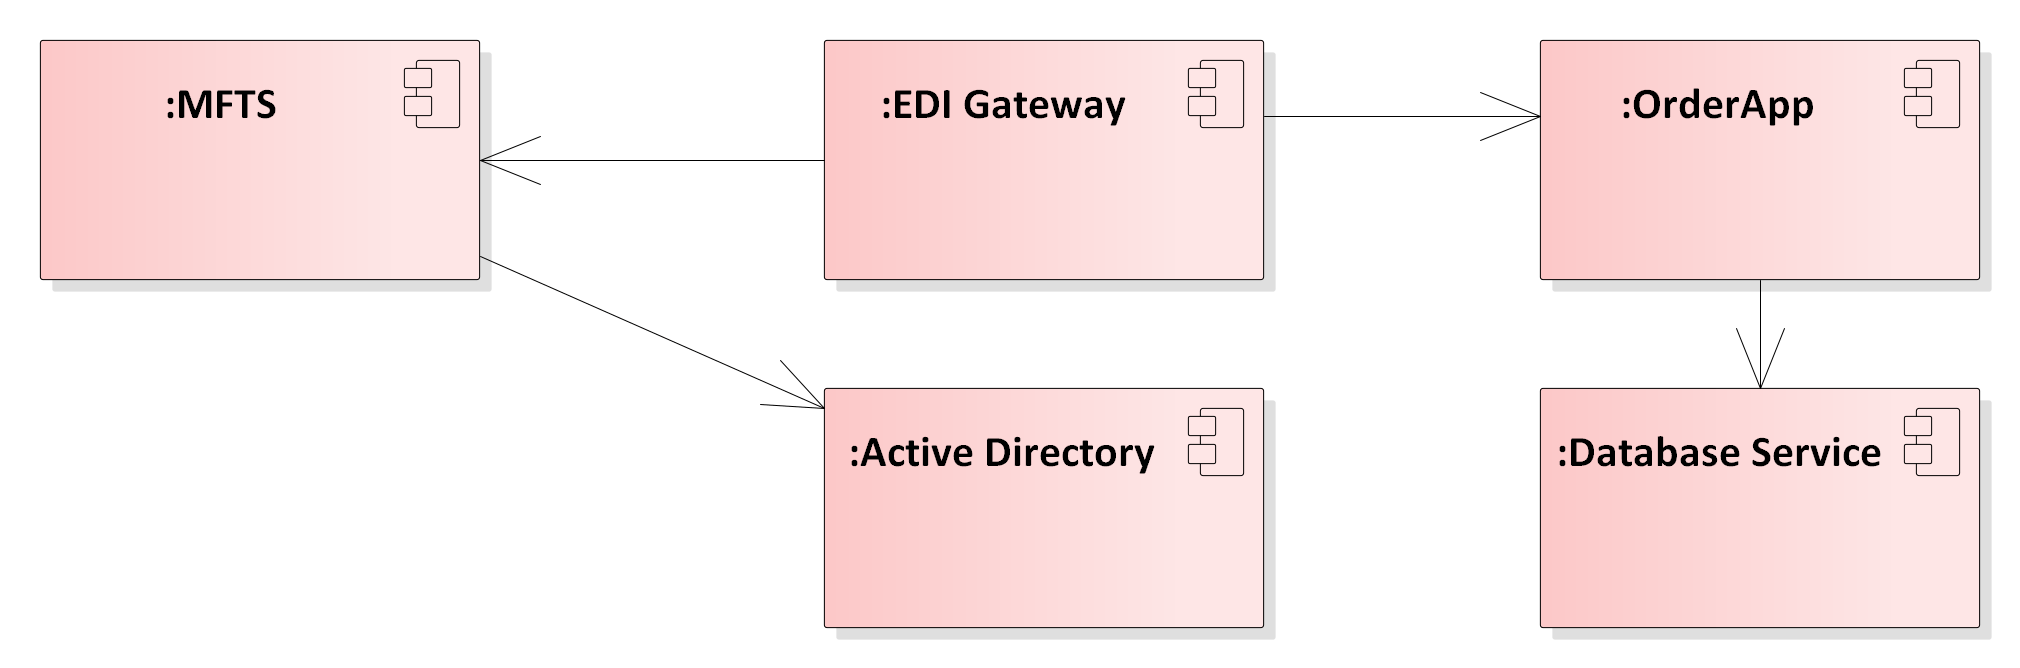 Deployment Model Basic